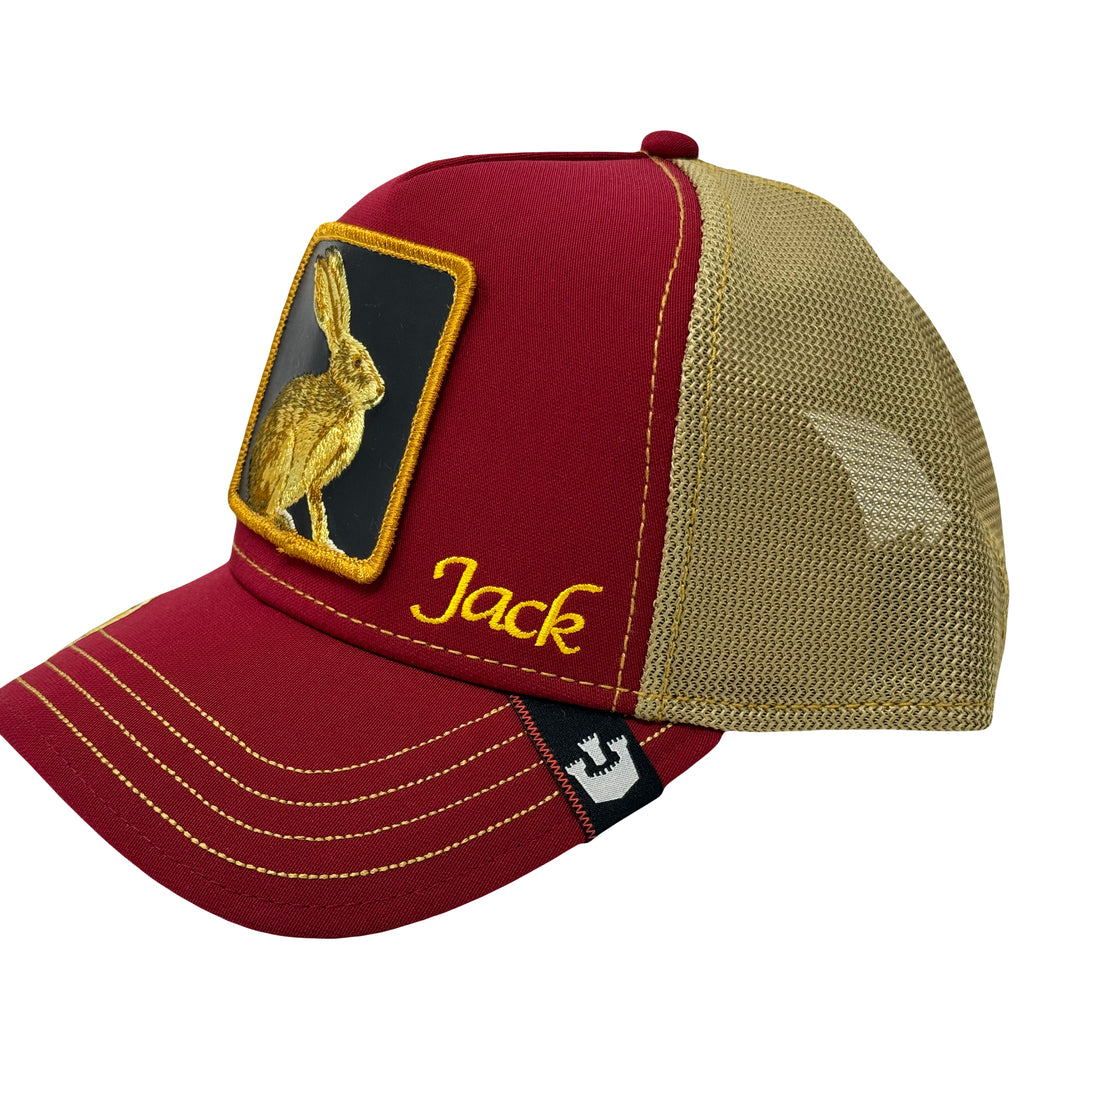 Goorin Bros. Rabbit Jack Jacked Casino The Farm Red Trucker Hat